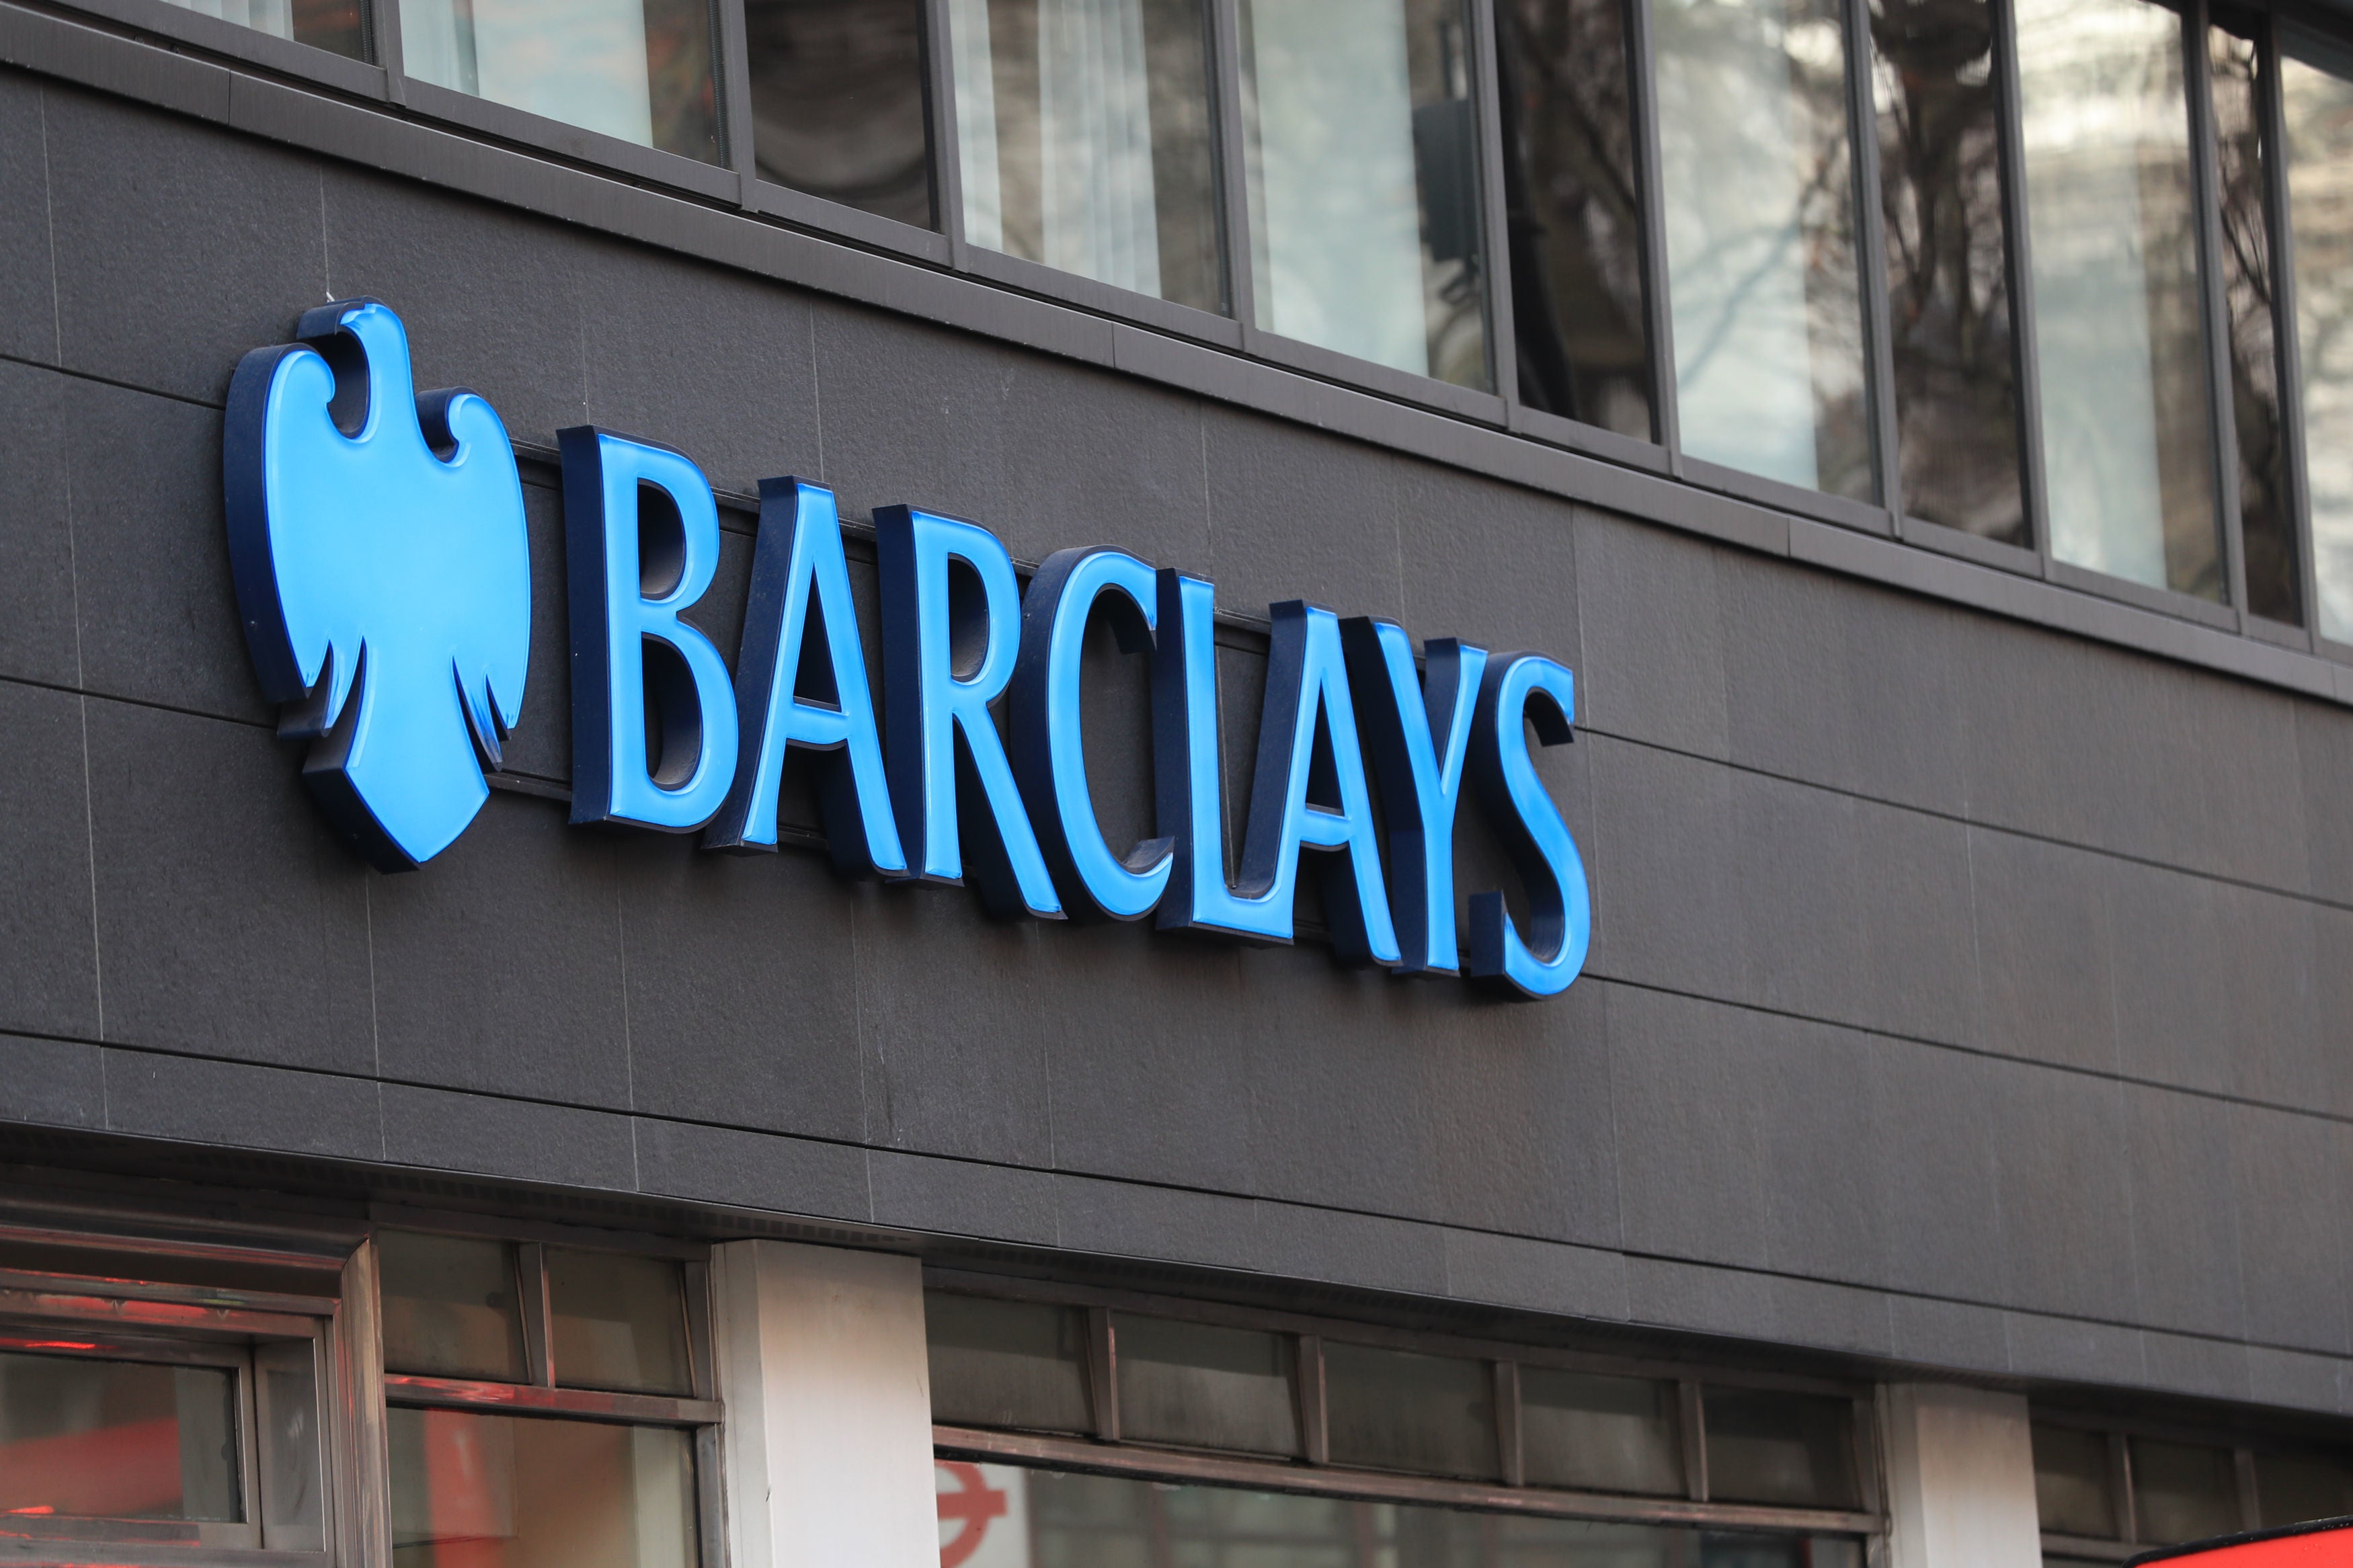 Barclays has joined HSBC and Santander in slashing mortgage rates